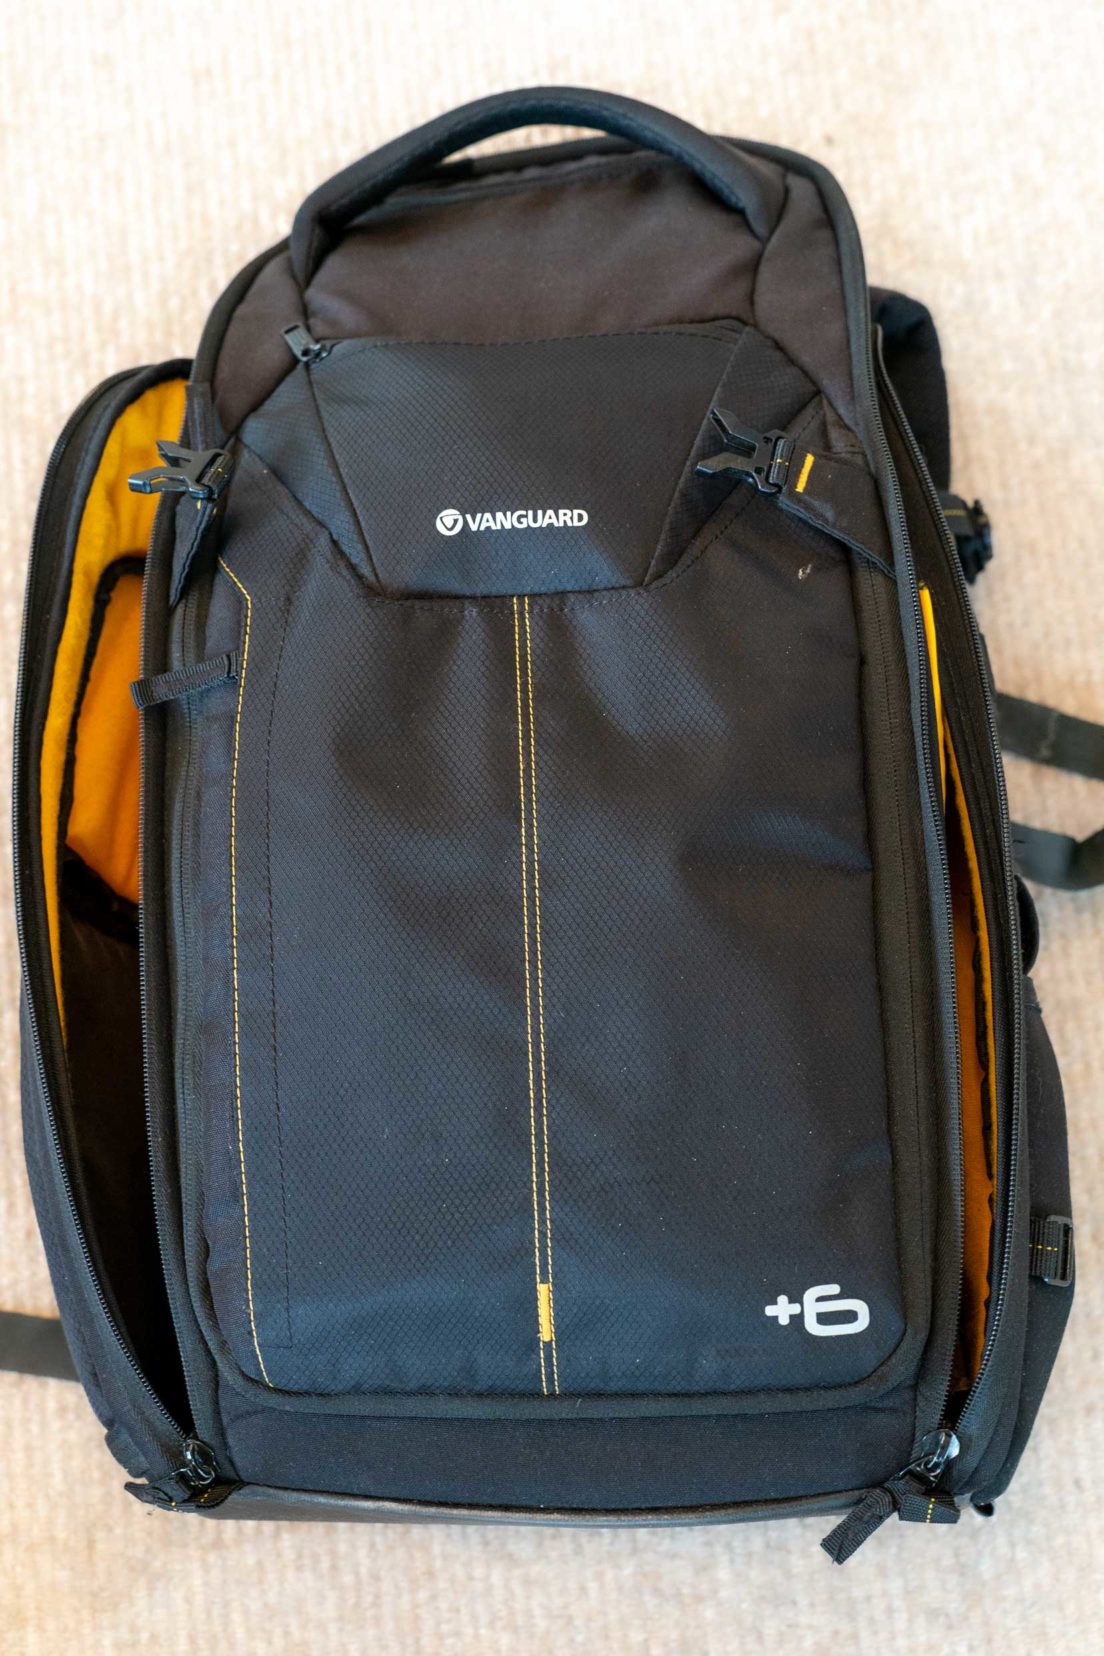 Vanguard-backpack-exterior